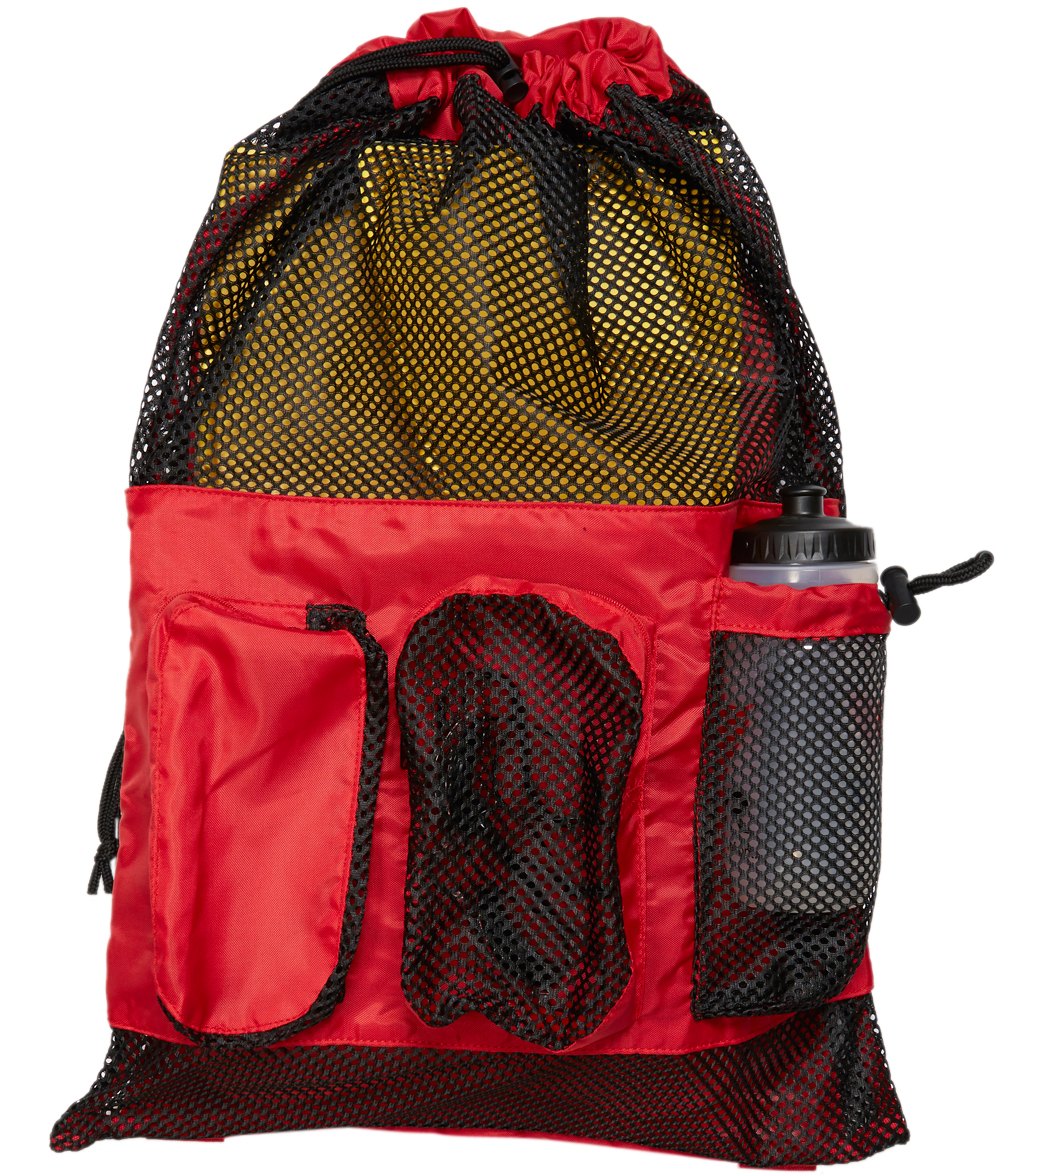 saucony backpack purpura